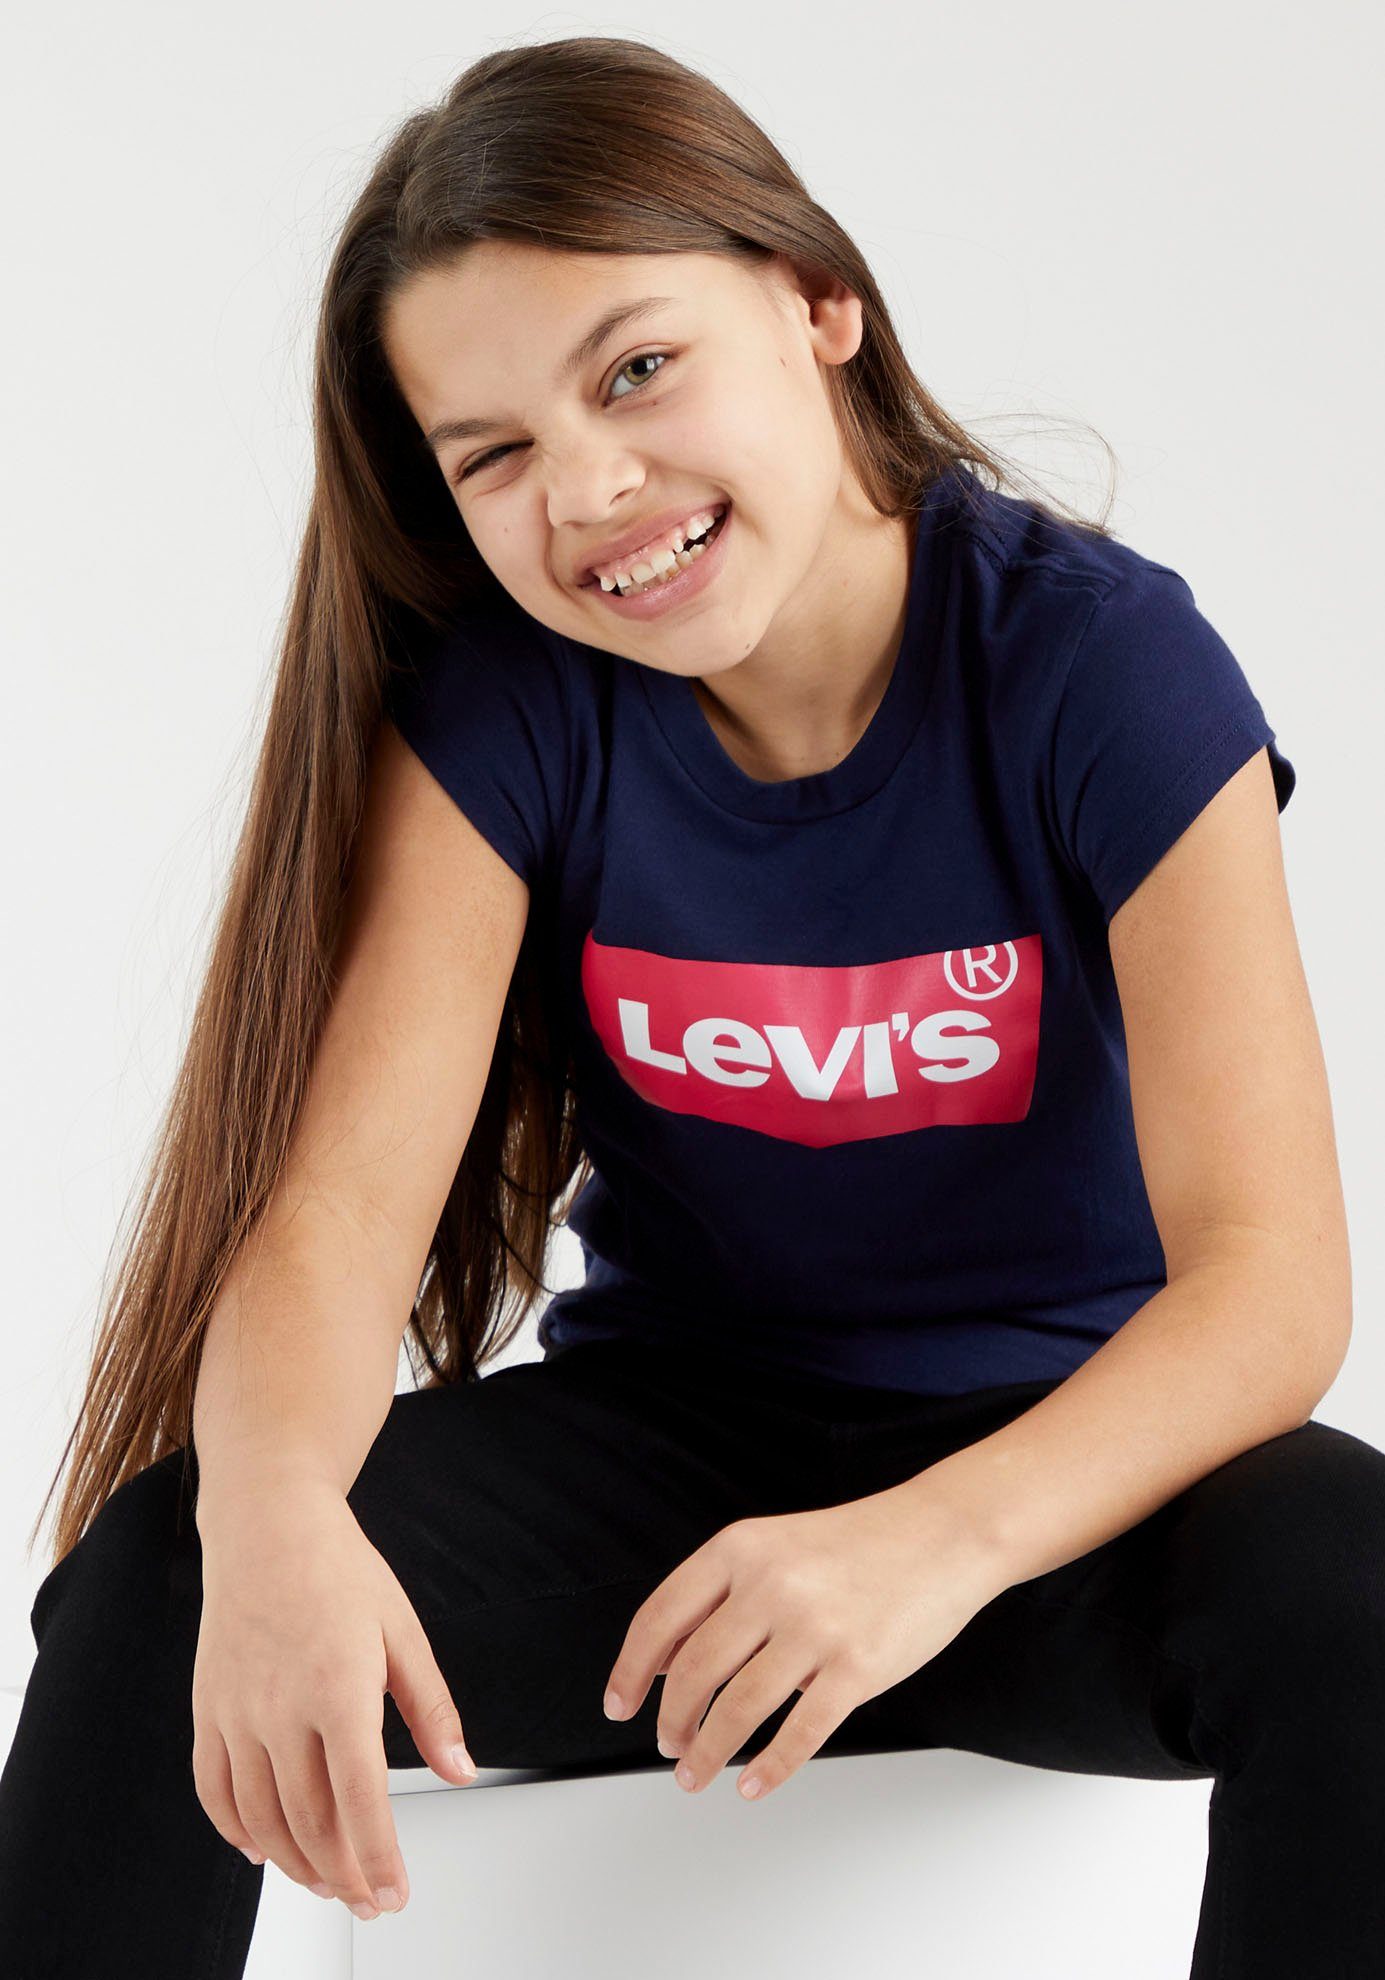 Levi's® for Kids GIRLS BATWING T-Shirt TEE peacoat/tea